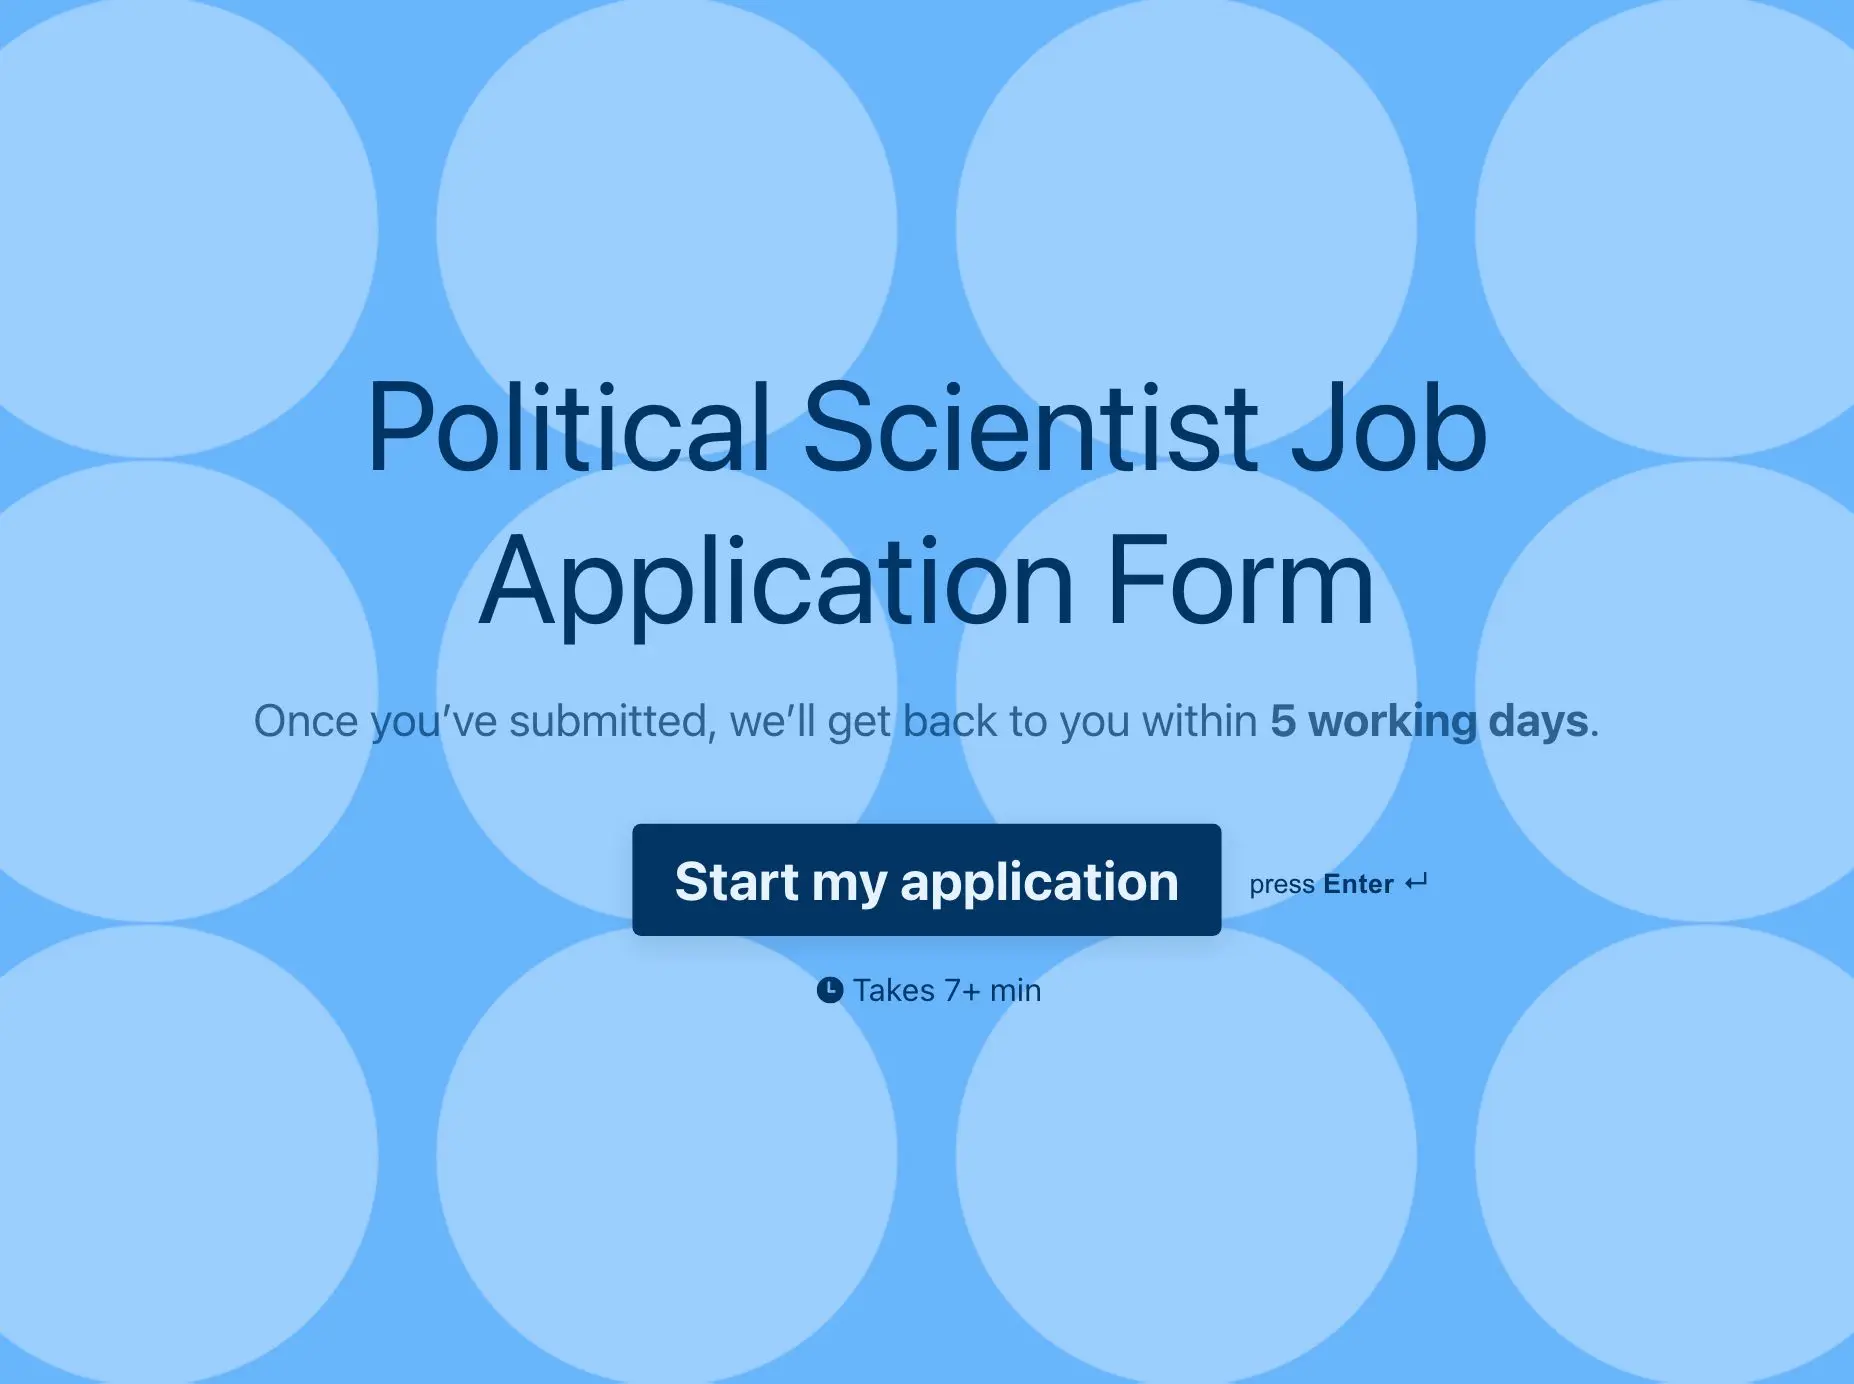 Political Scientist Job Application Form Template Hero